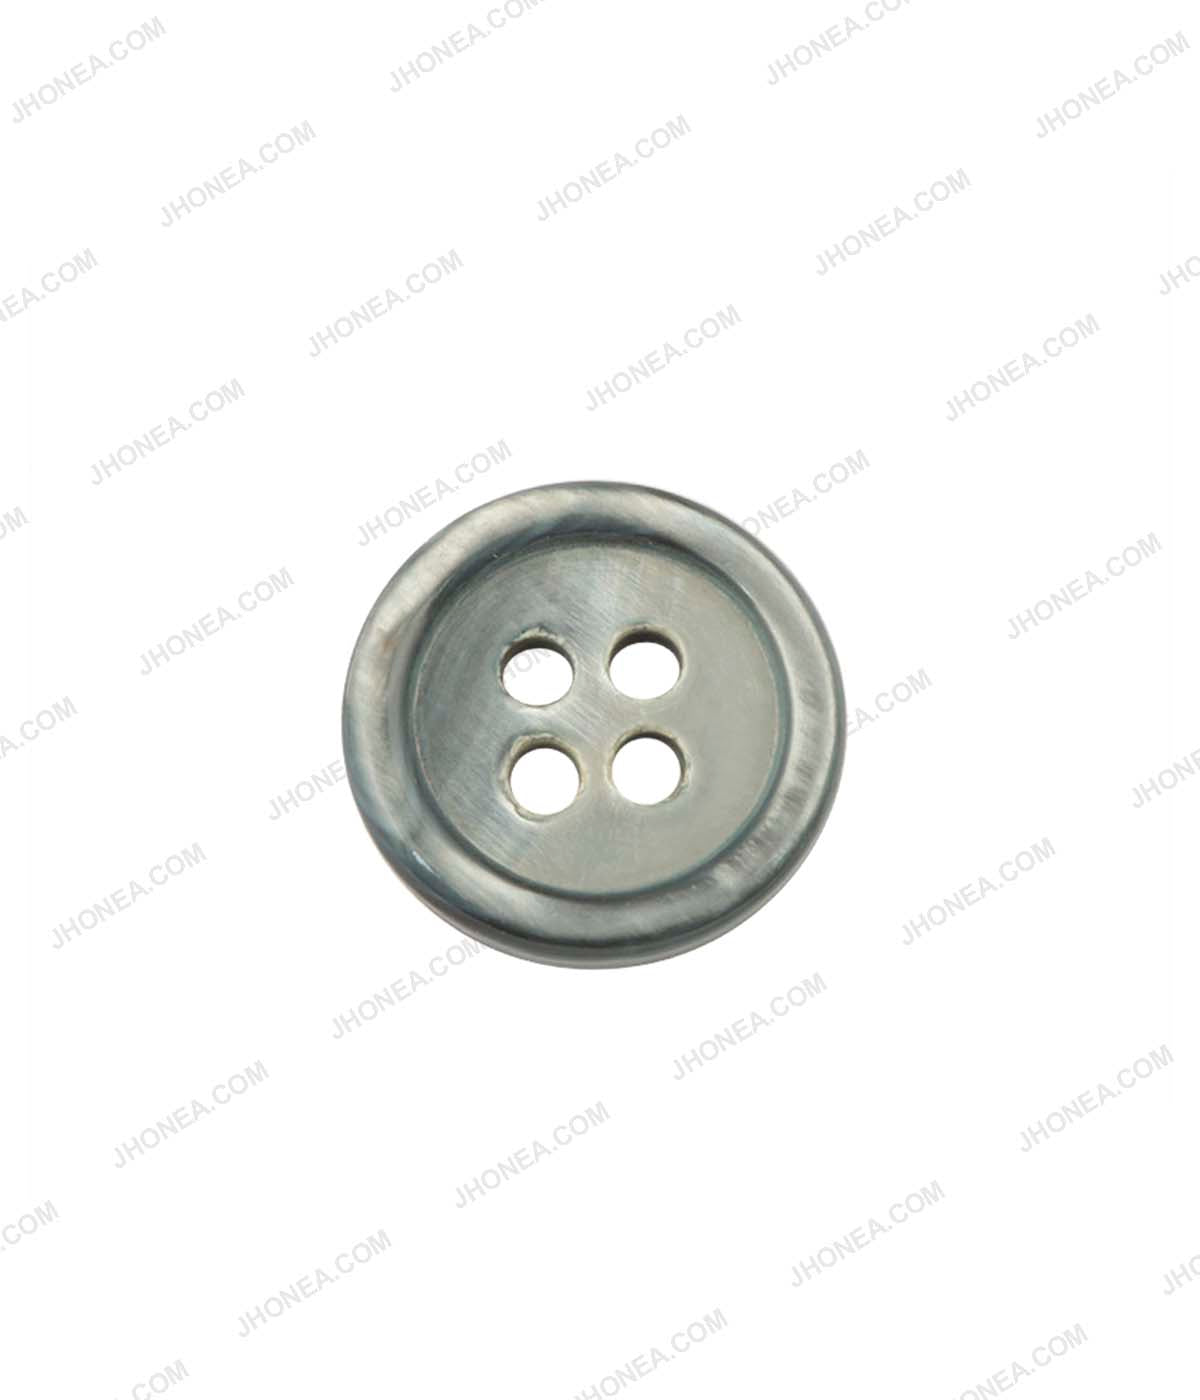 Antique Silver 4 Hole Metal Button